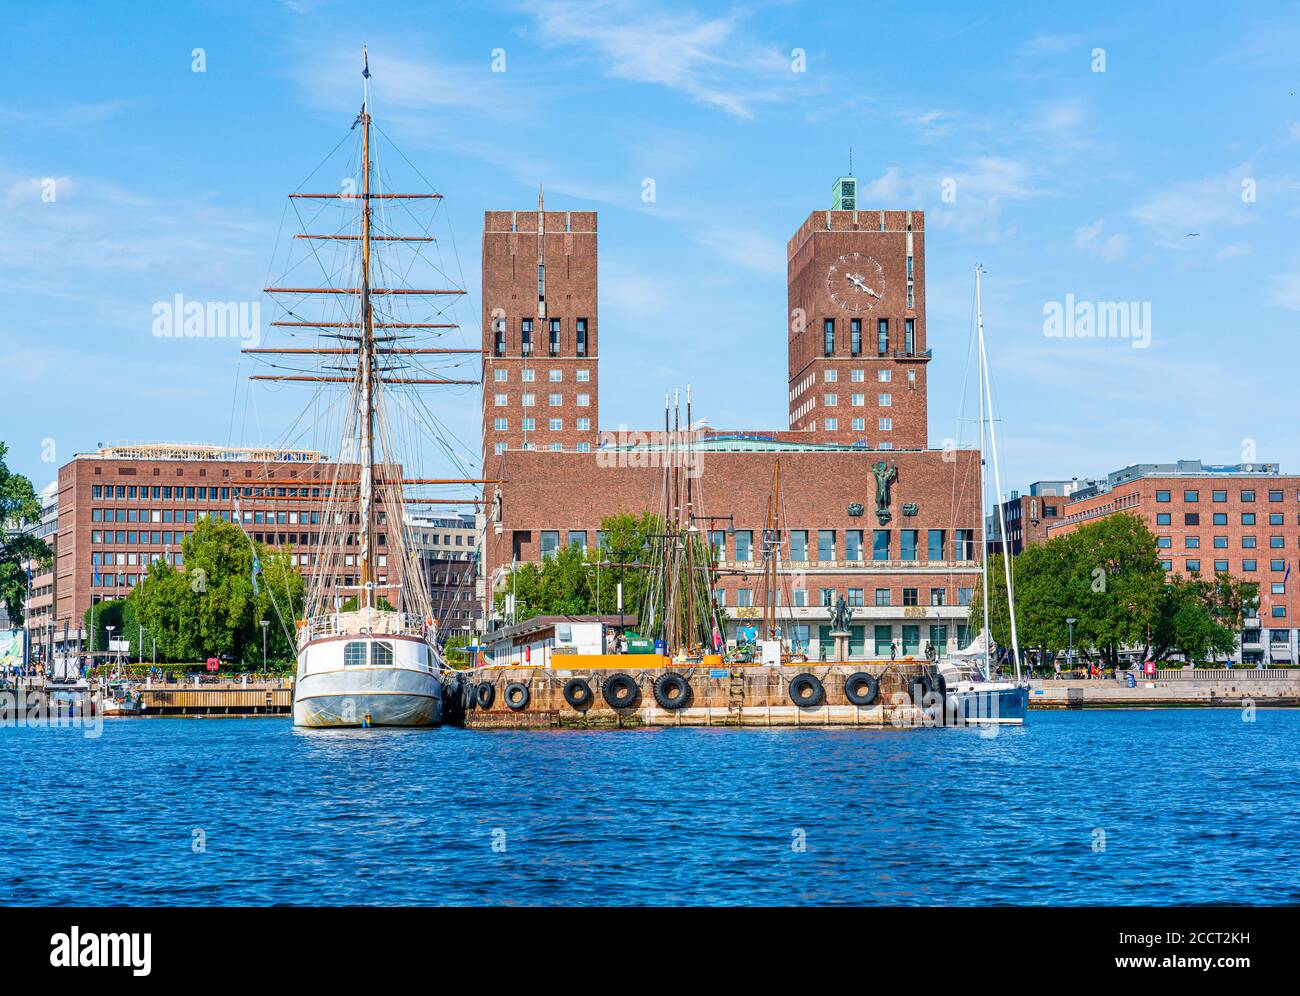 Oslo Rathaus die Radhuset - Ort des Nobelpreises Preisverleihungszeremonie aus Oslofjord - Norwegen Stockfoto